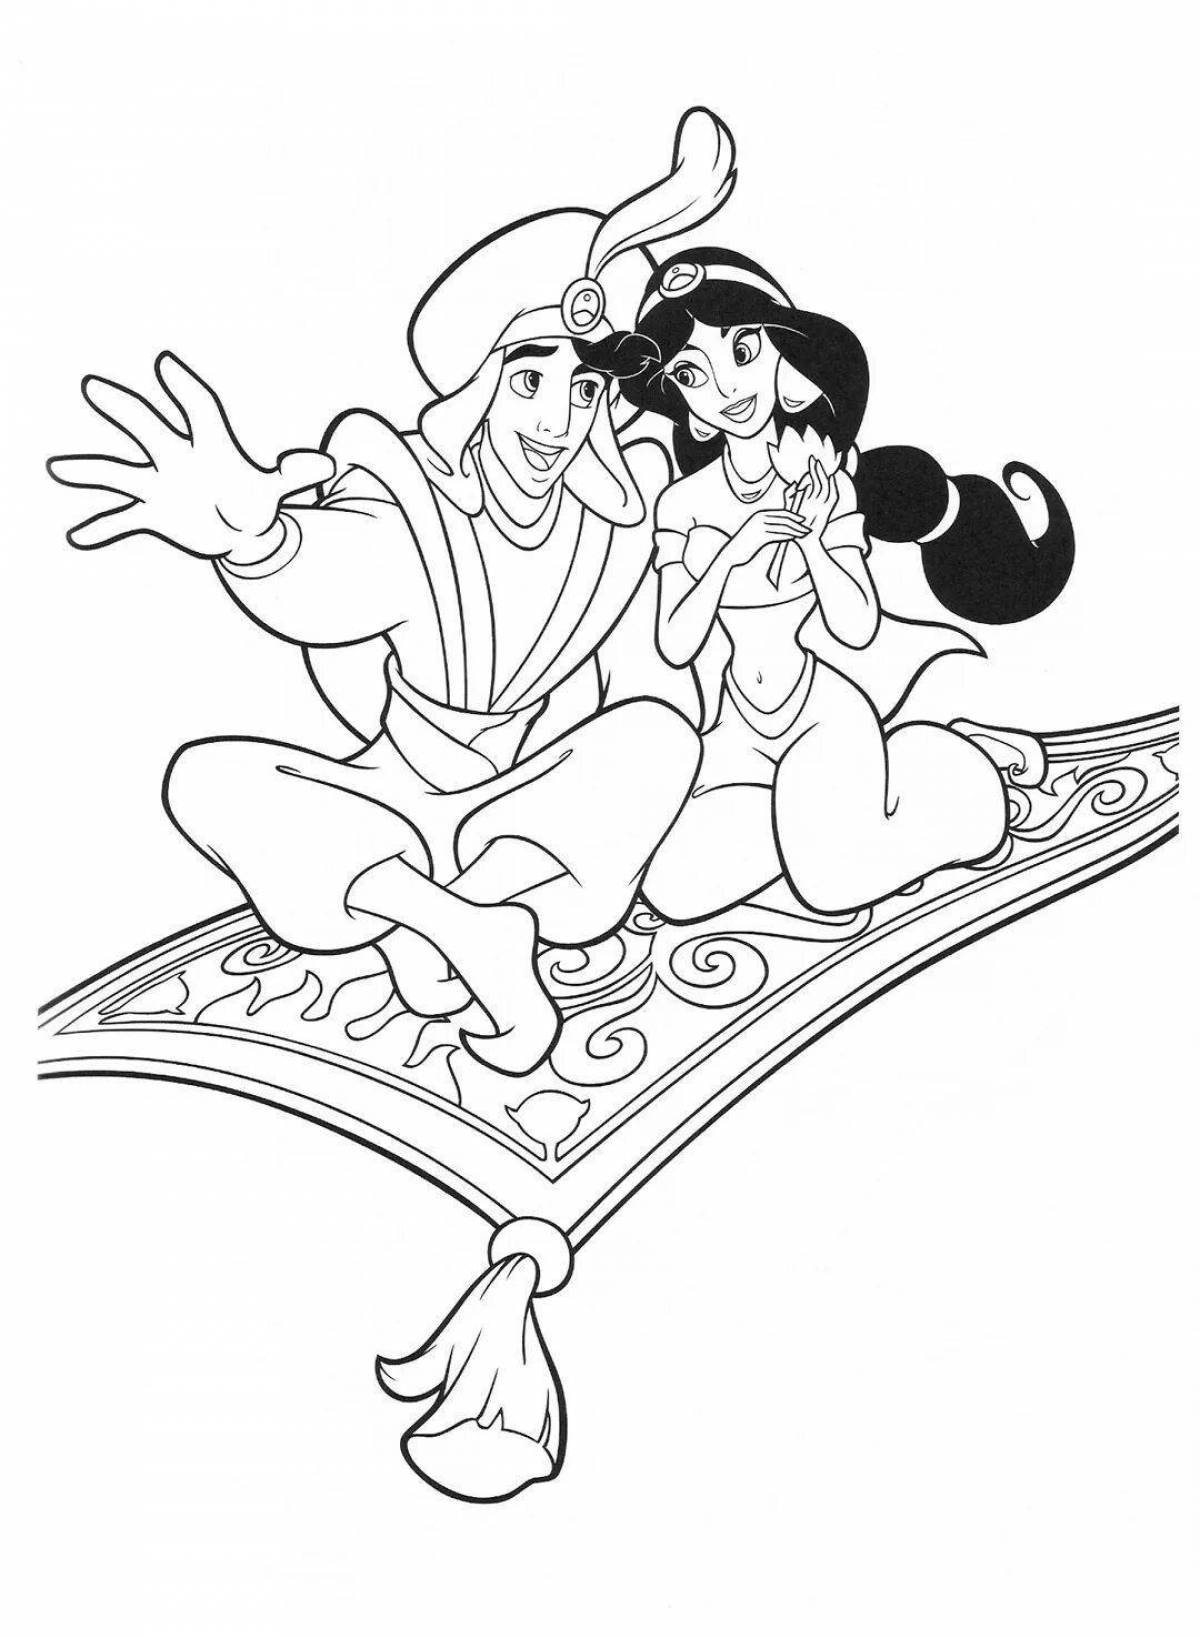 Aladdin playful coloring